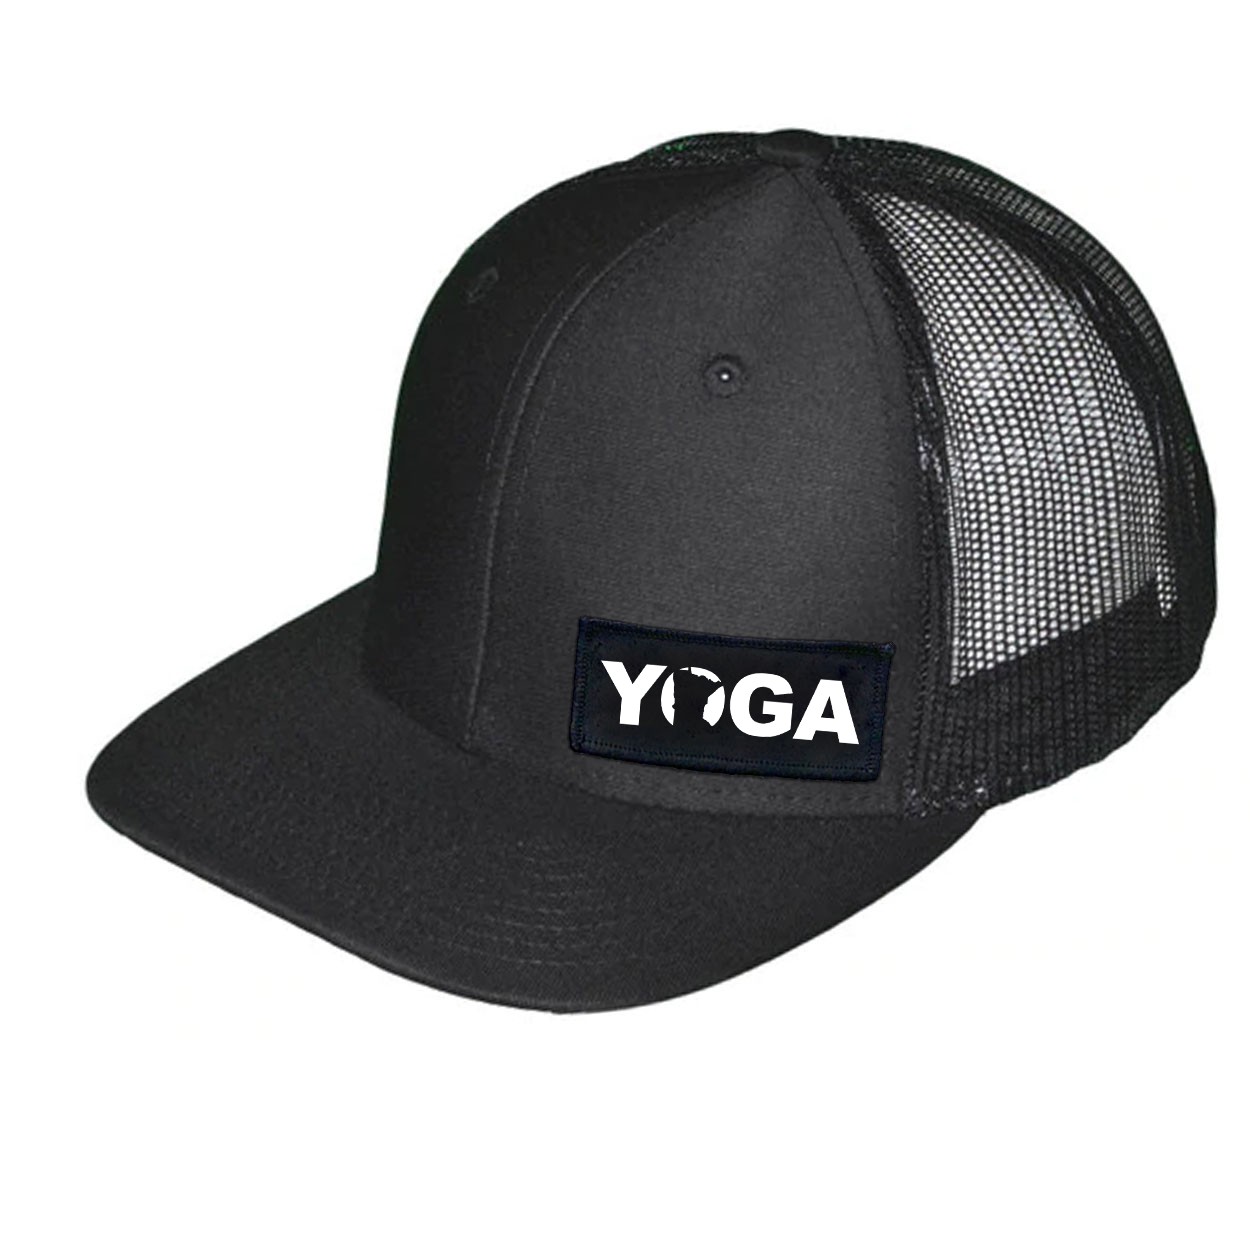 Yoga Minnesota Night Out Woven Patch Snapback Trucker Hat Black (White Logo)